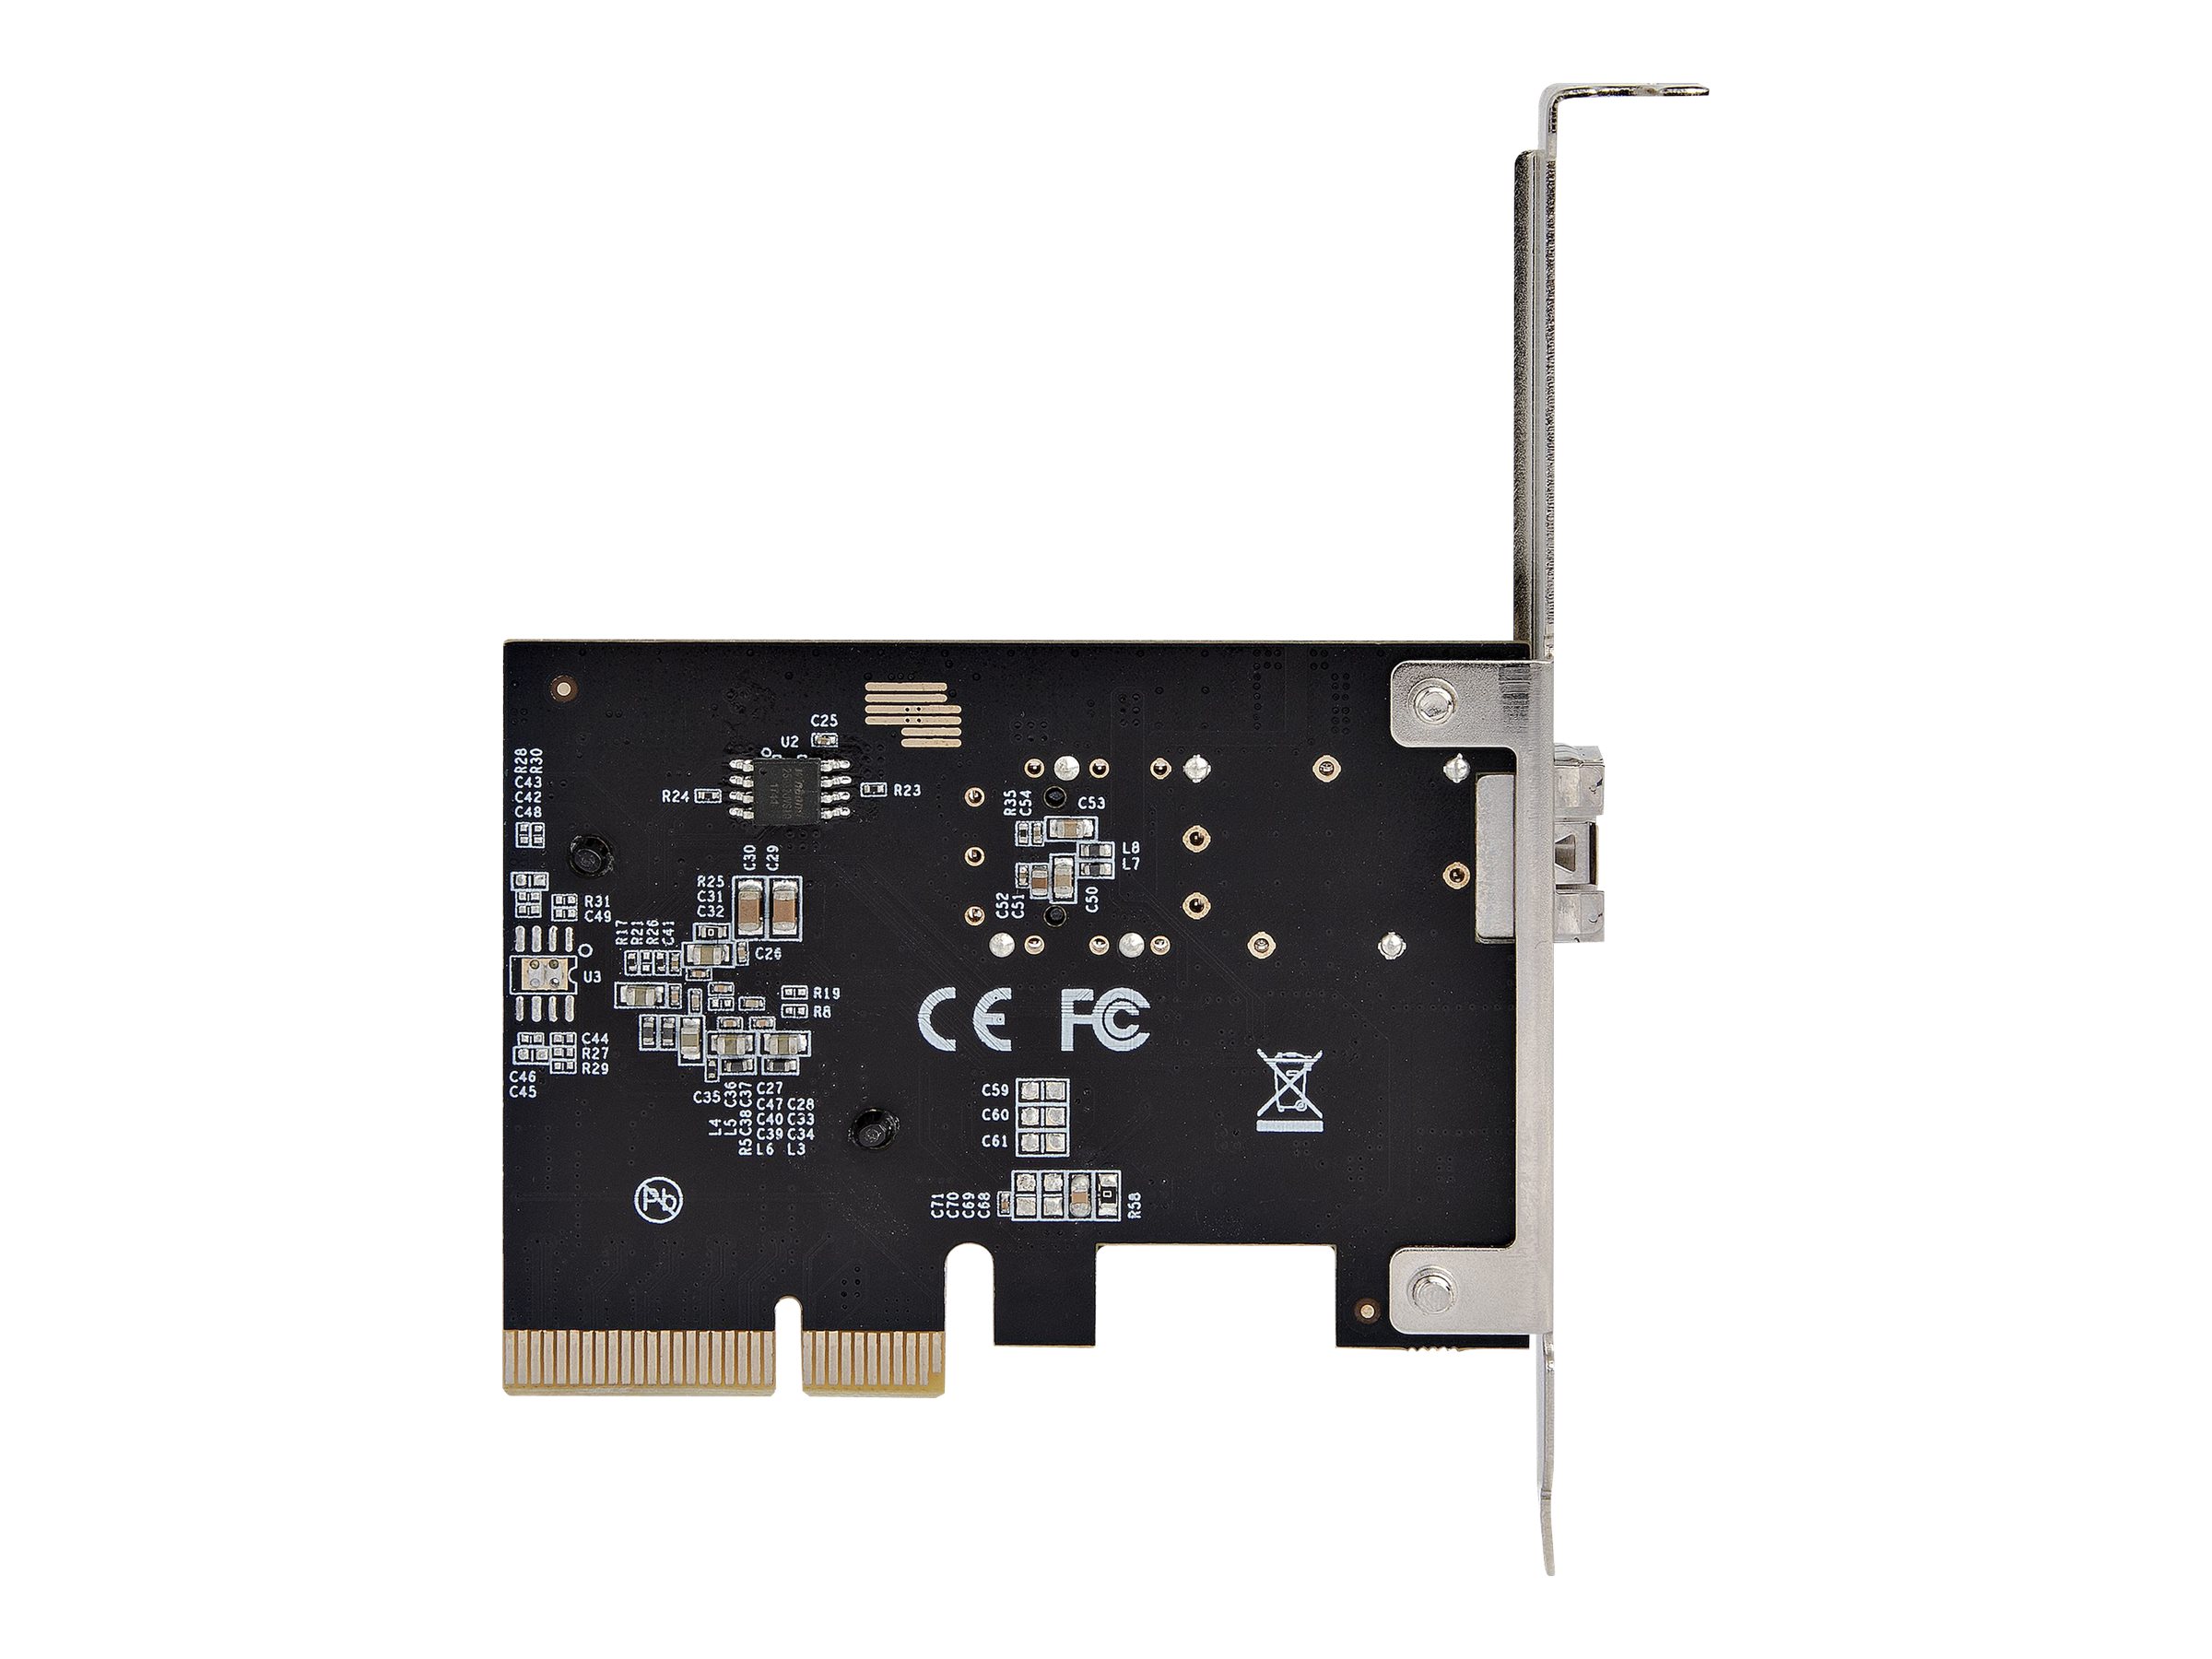 StarTech.com 10Gbe PCI Express SFP+ Netzwerkkarte - LWL Netzwerkkarte mit SFP+ Port - Open SFP+ für MSA-konforme LWL/Glasfaser/Kupfer Module/Direct-Attach Kabel - 10Gbit LWL PCIe NIC (PEX10GSFP)